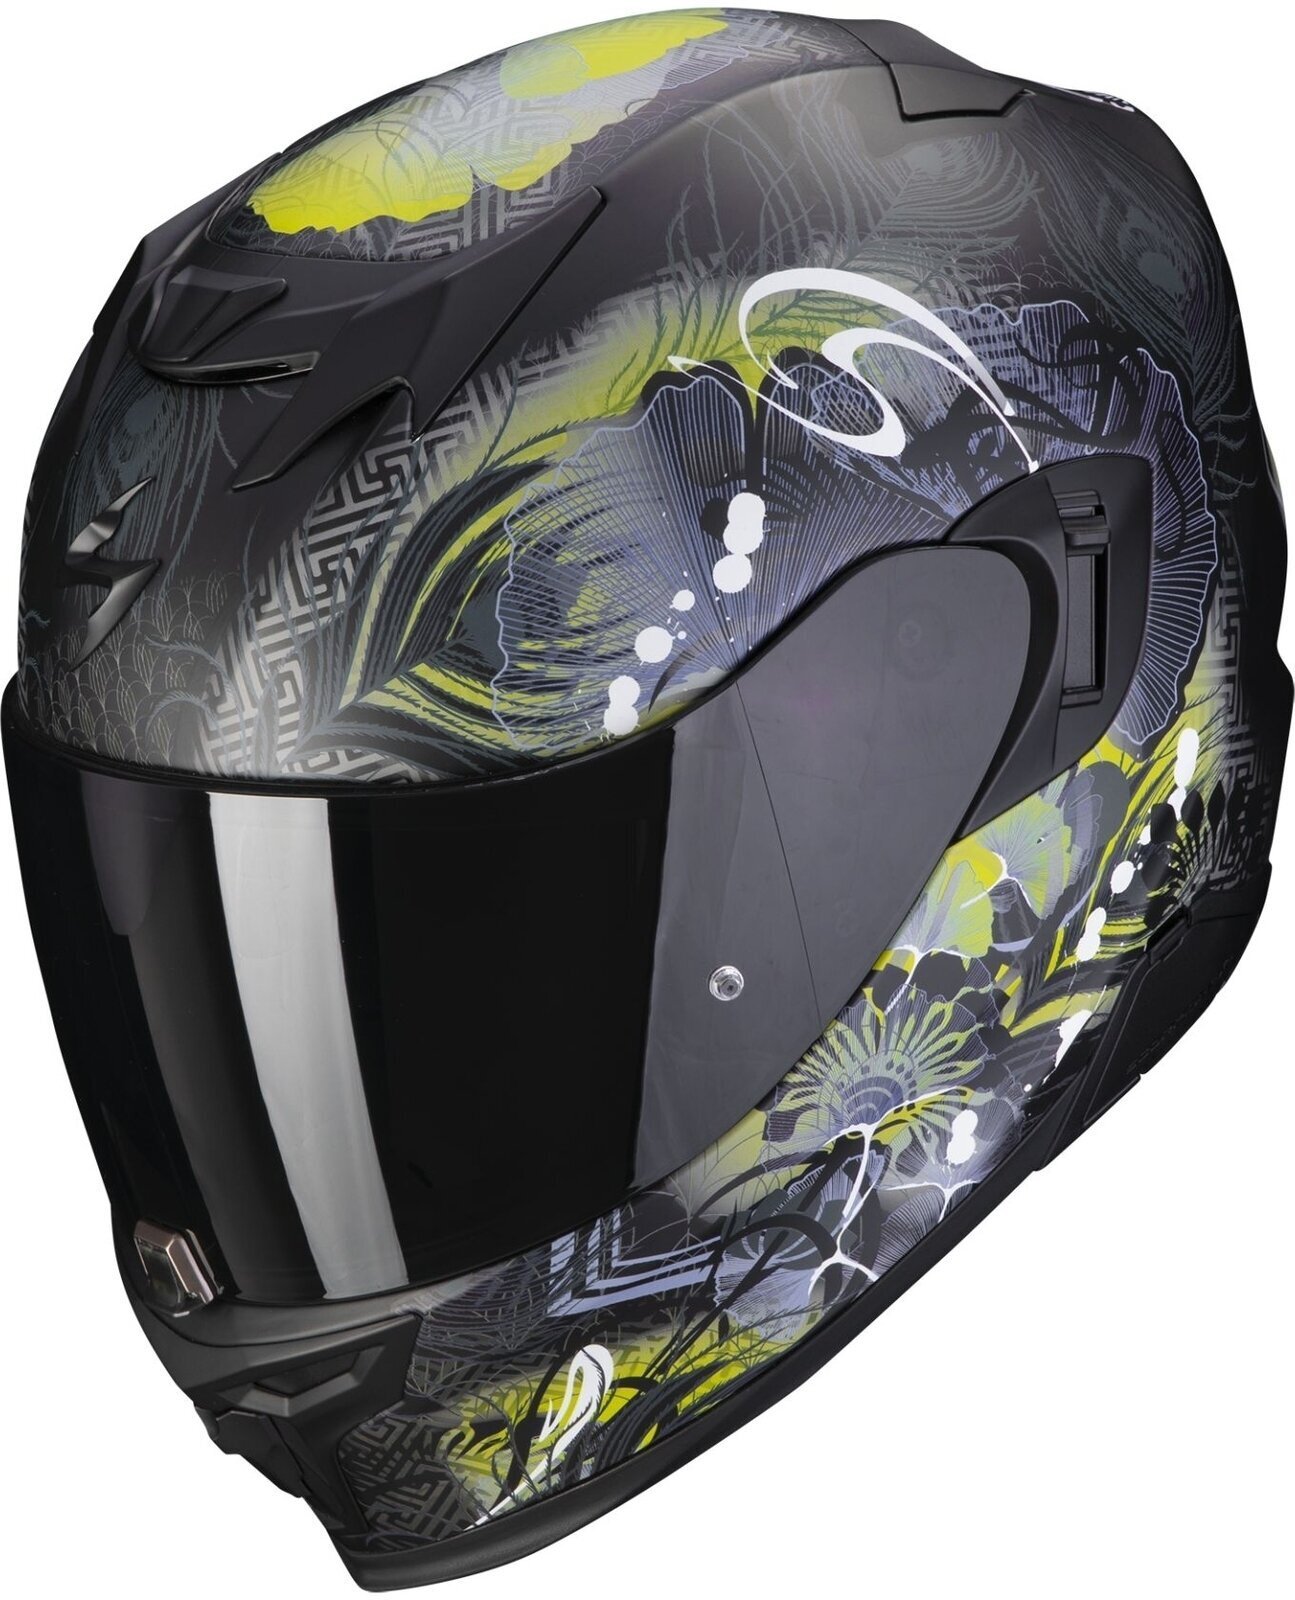 Helmet Scorpion EXO 520 EVO AIR MELROSE Matt Black/Yellow L Helmet